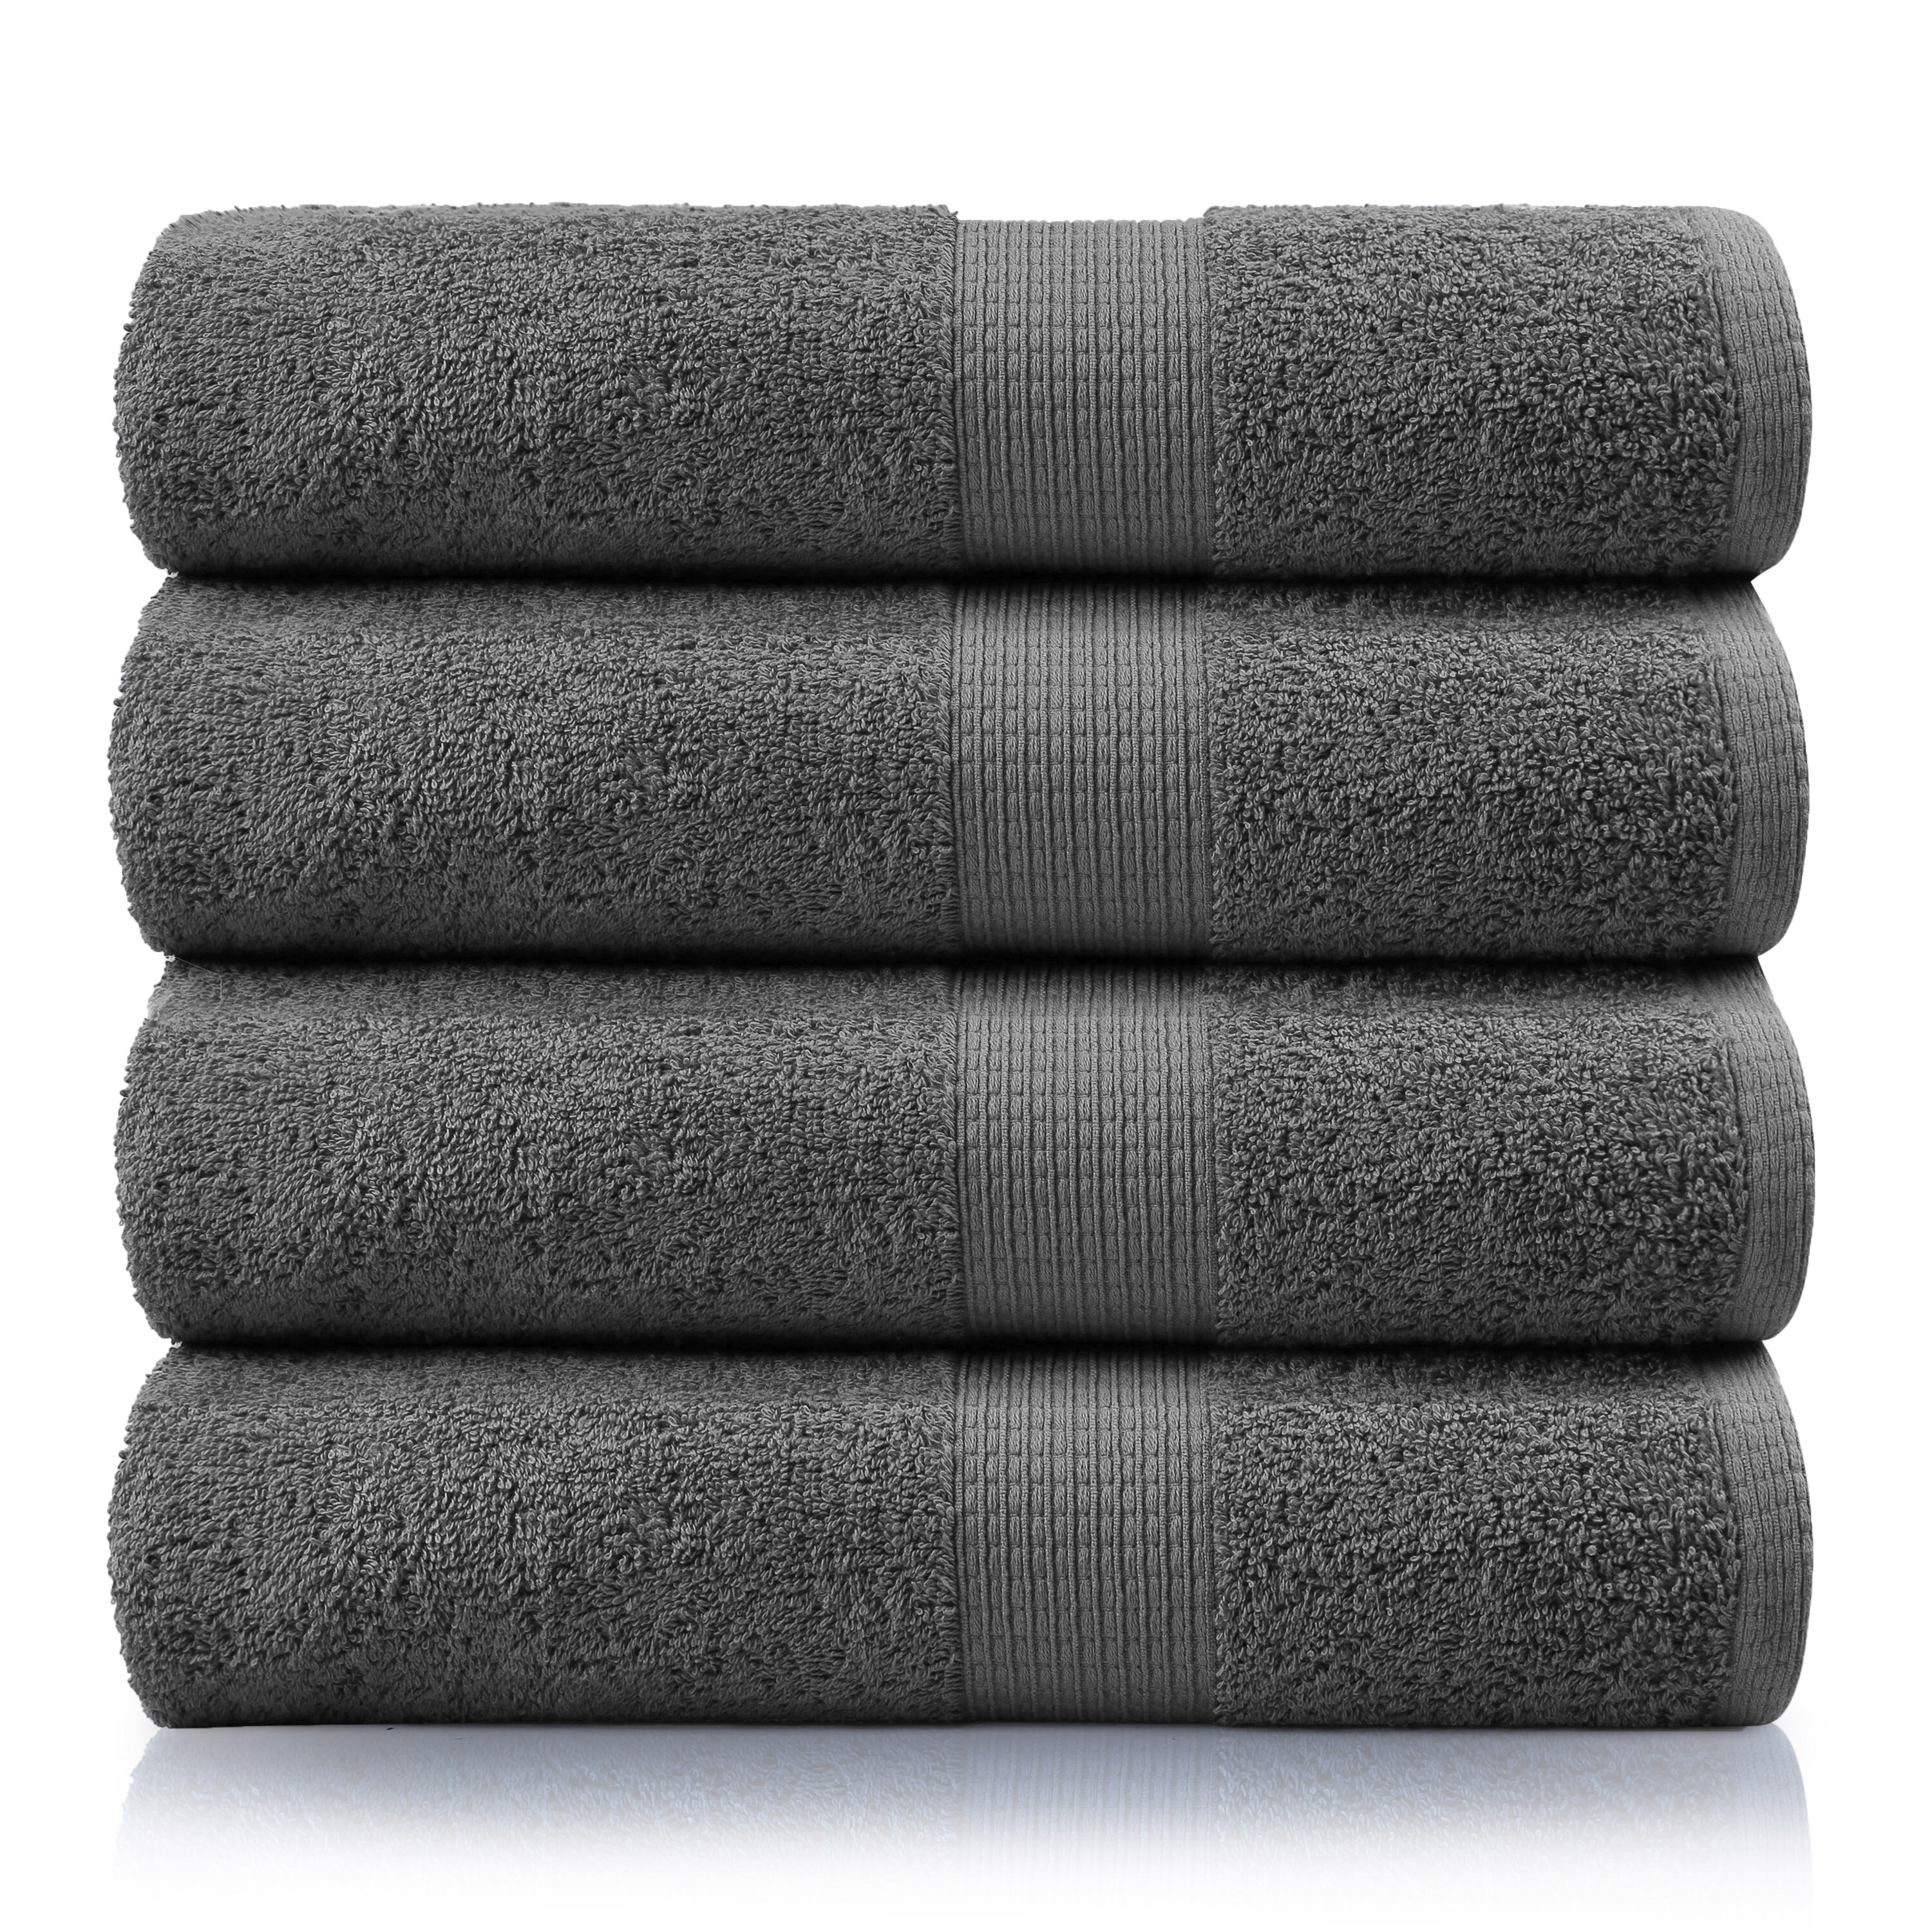 Set of Four Luxury 100% Egyptian Cotton Bath Towels Set. 